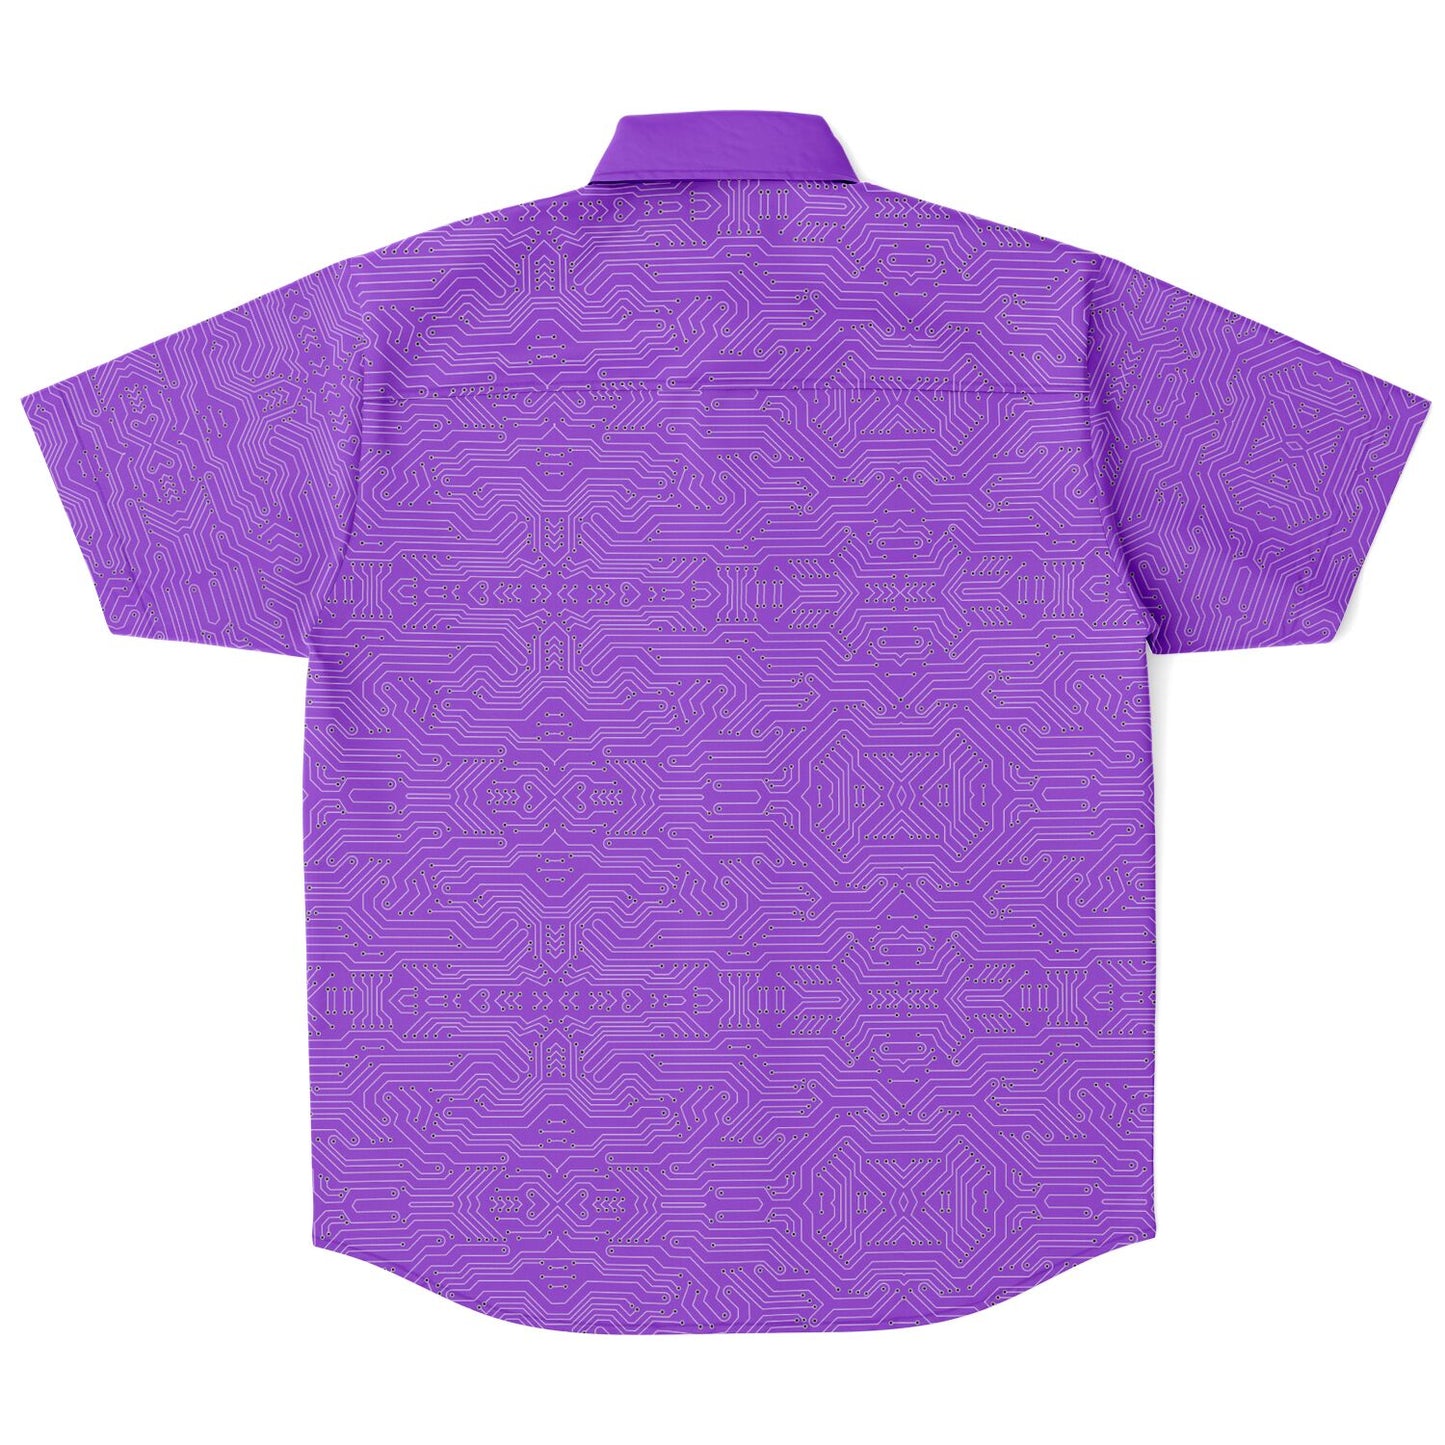 Circuit Board Short Sleeve Button Down Shirt- Purple